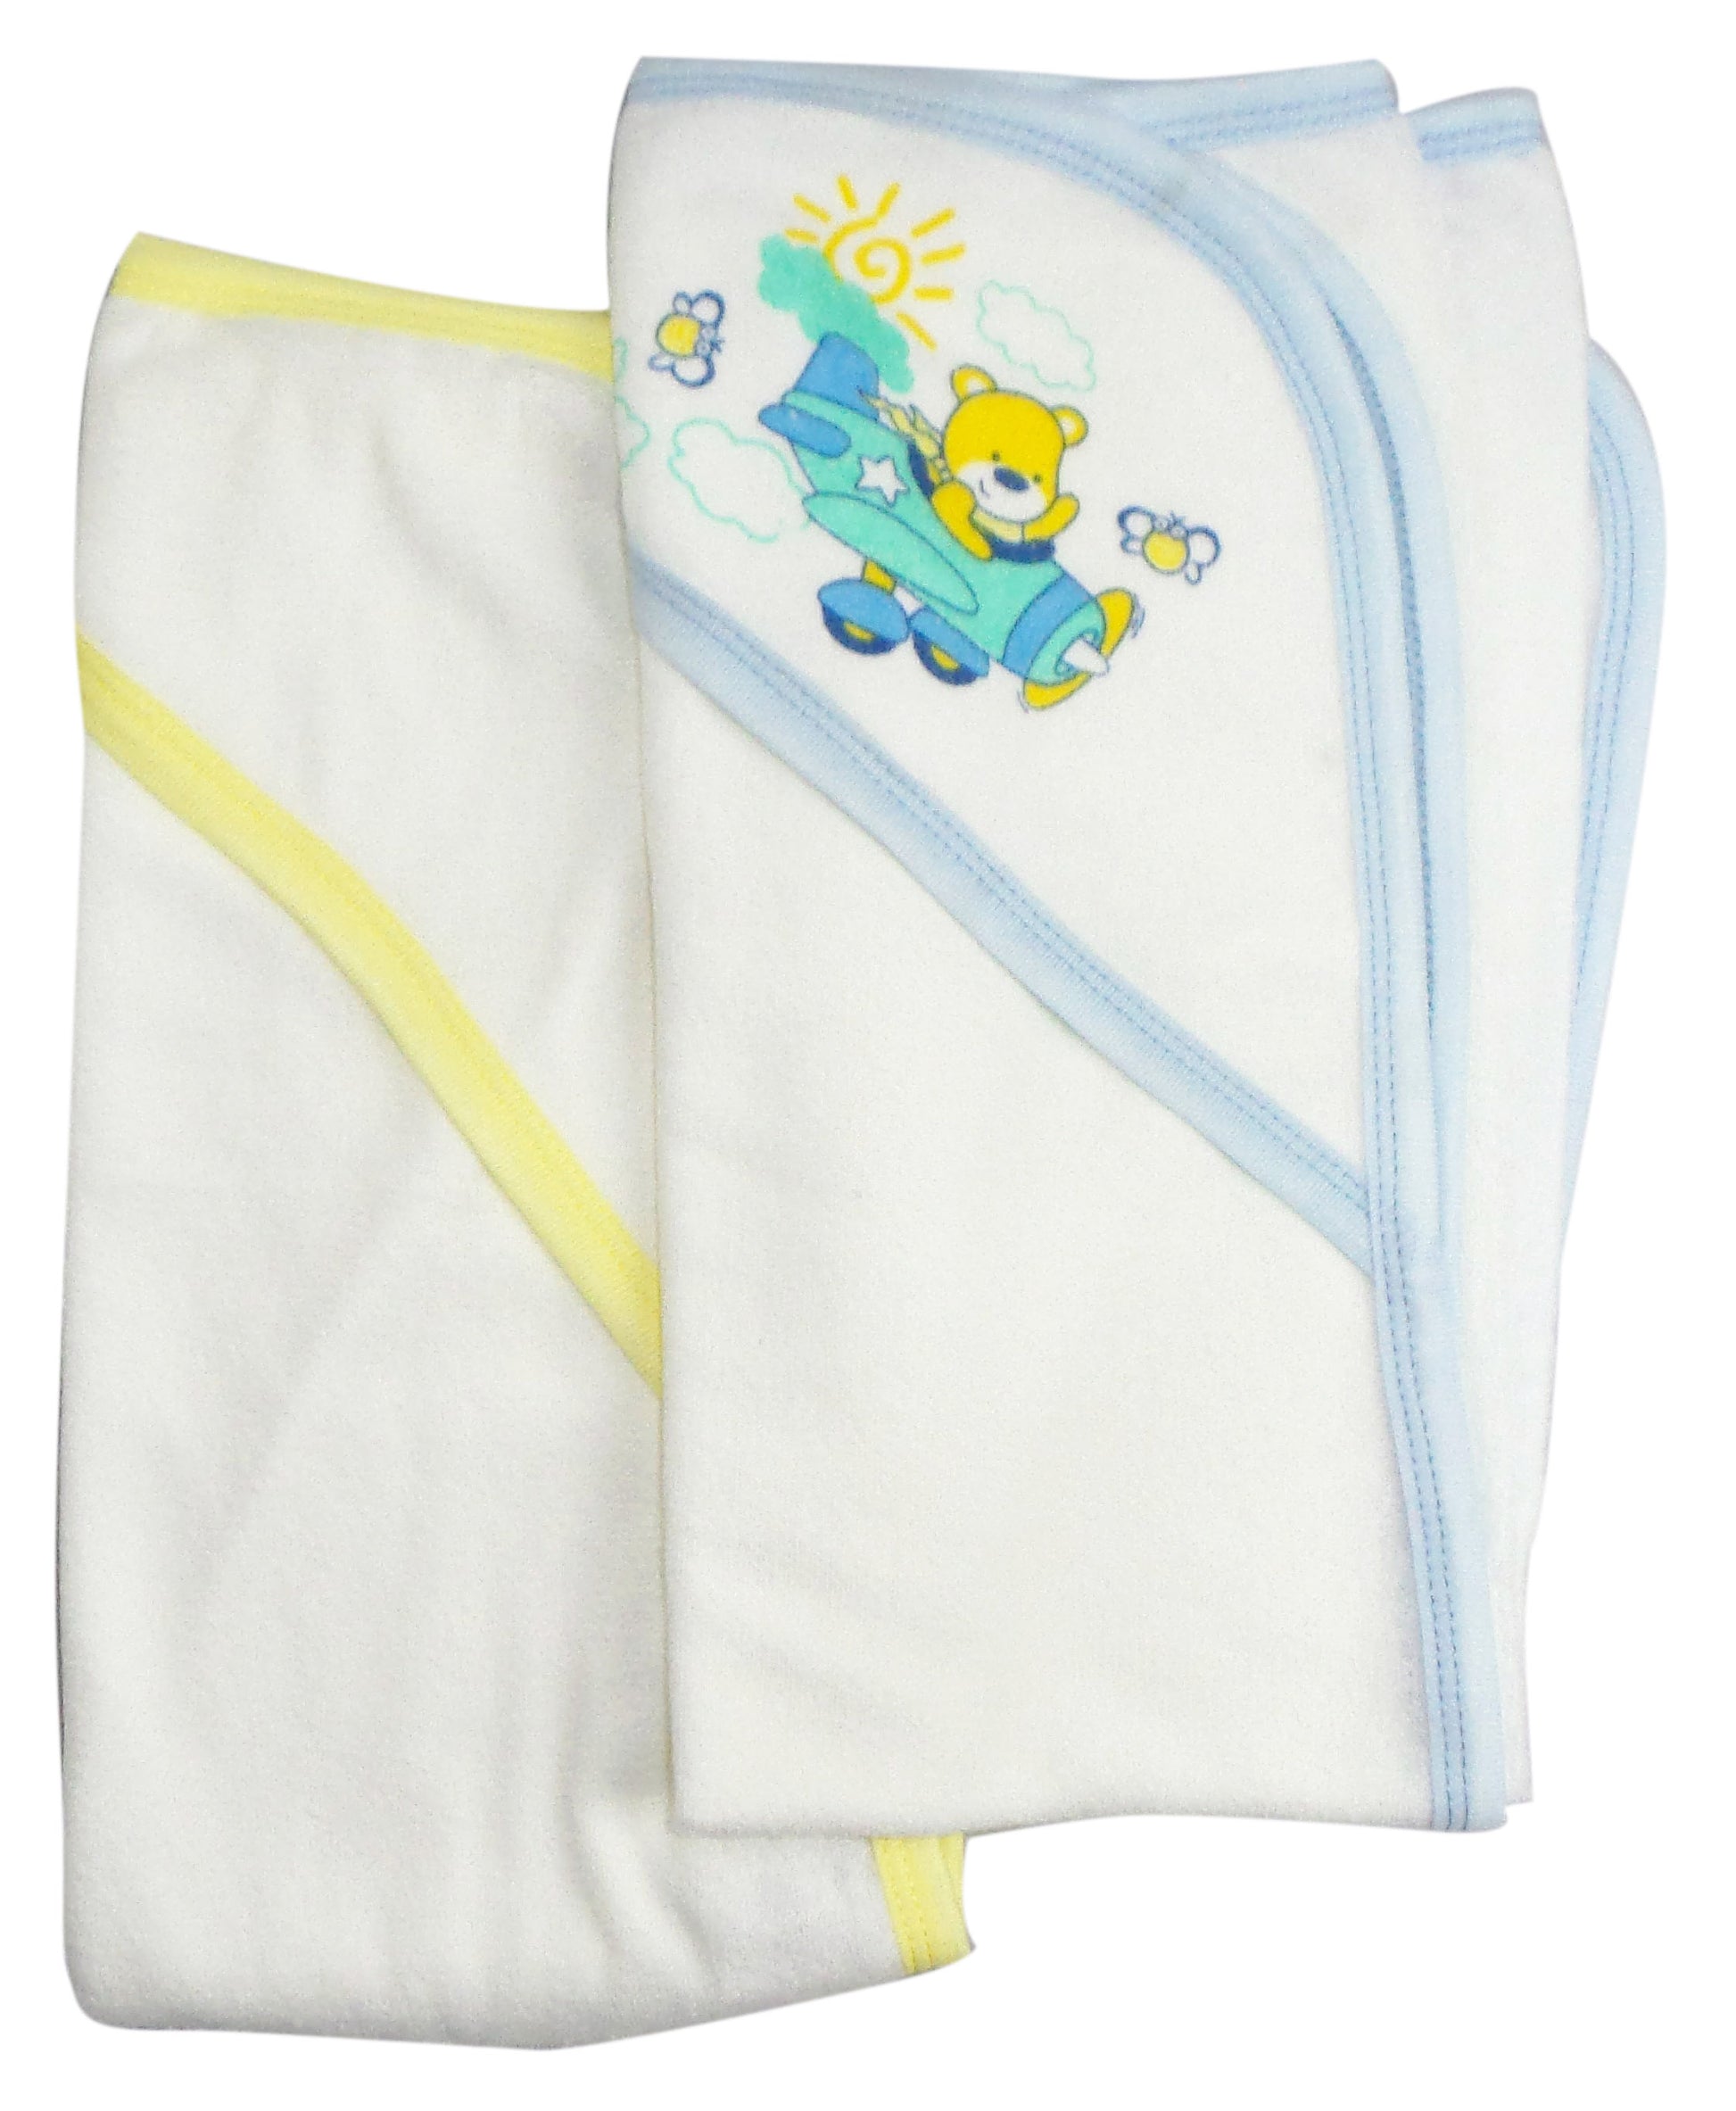 Infant Hooded Bath Towel (Pack of 2) 021B-Blue-021B-Yellow